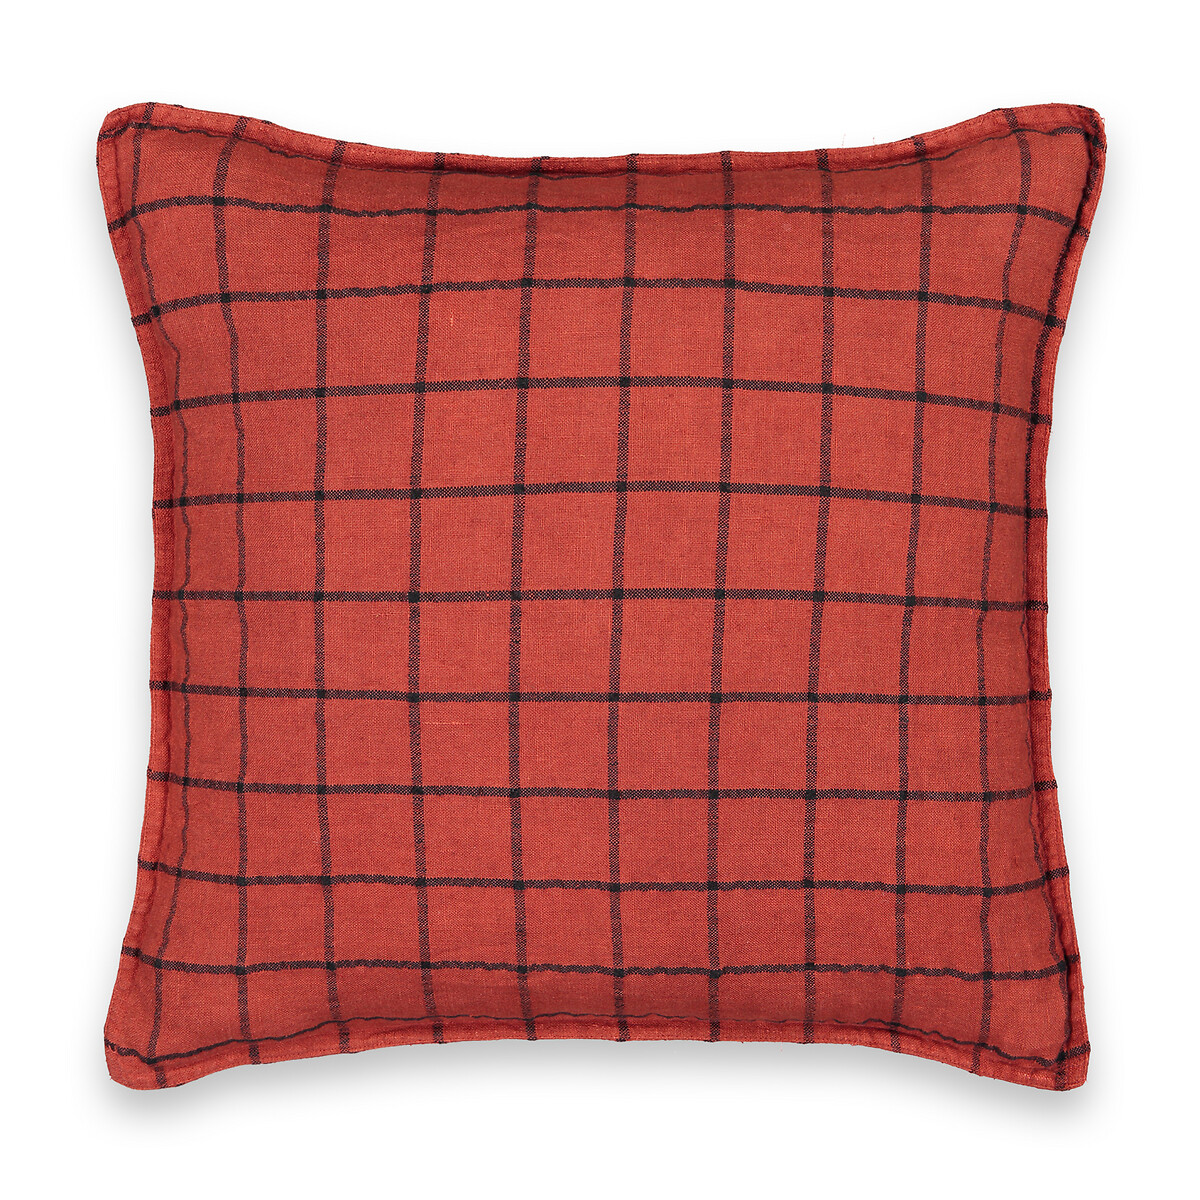 Чехол LaRedoute На подушку из льна Barley 45 x 45 см красный, размер 45 x 45 см - фото 1